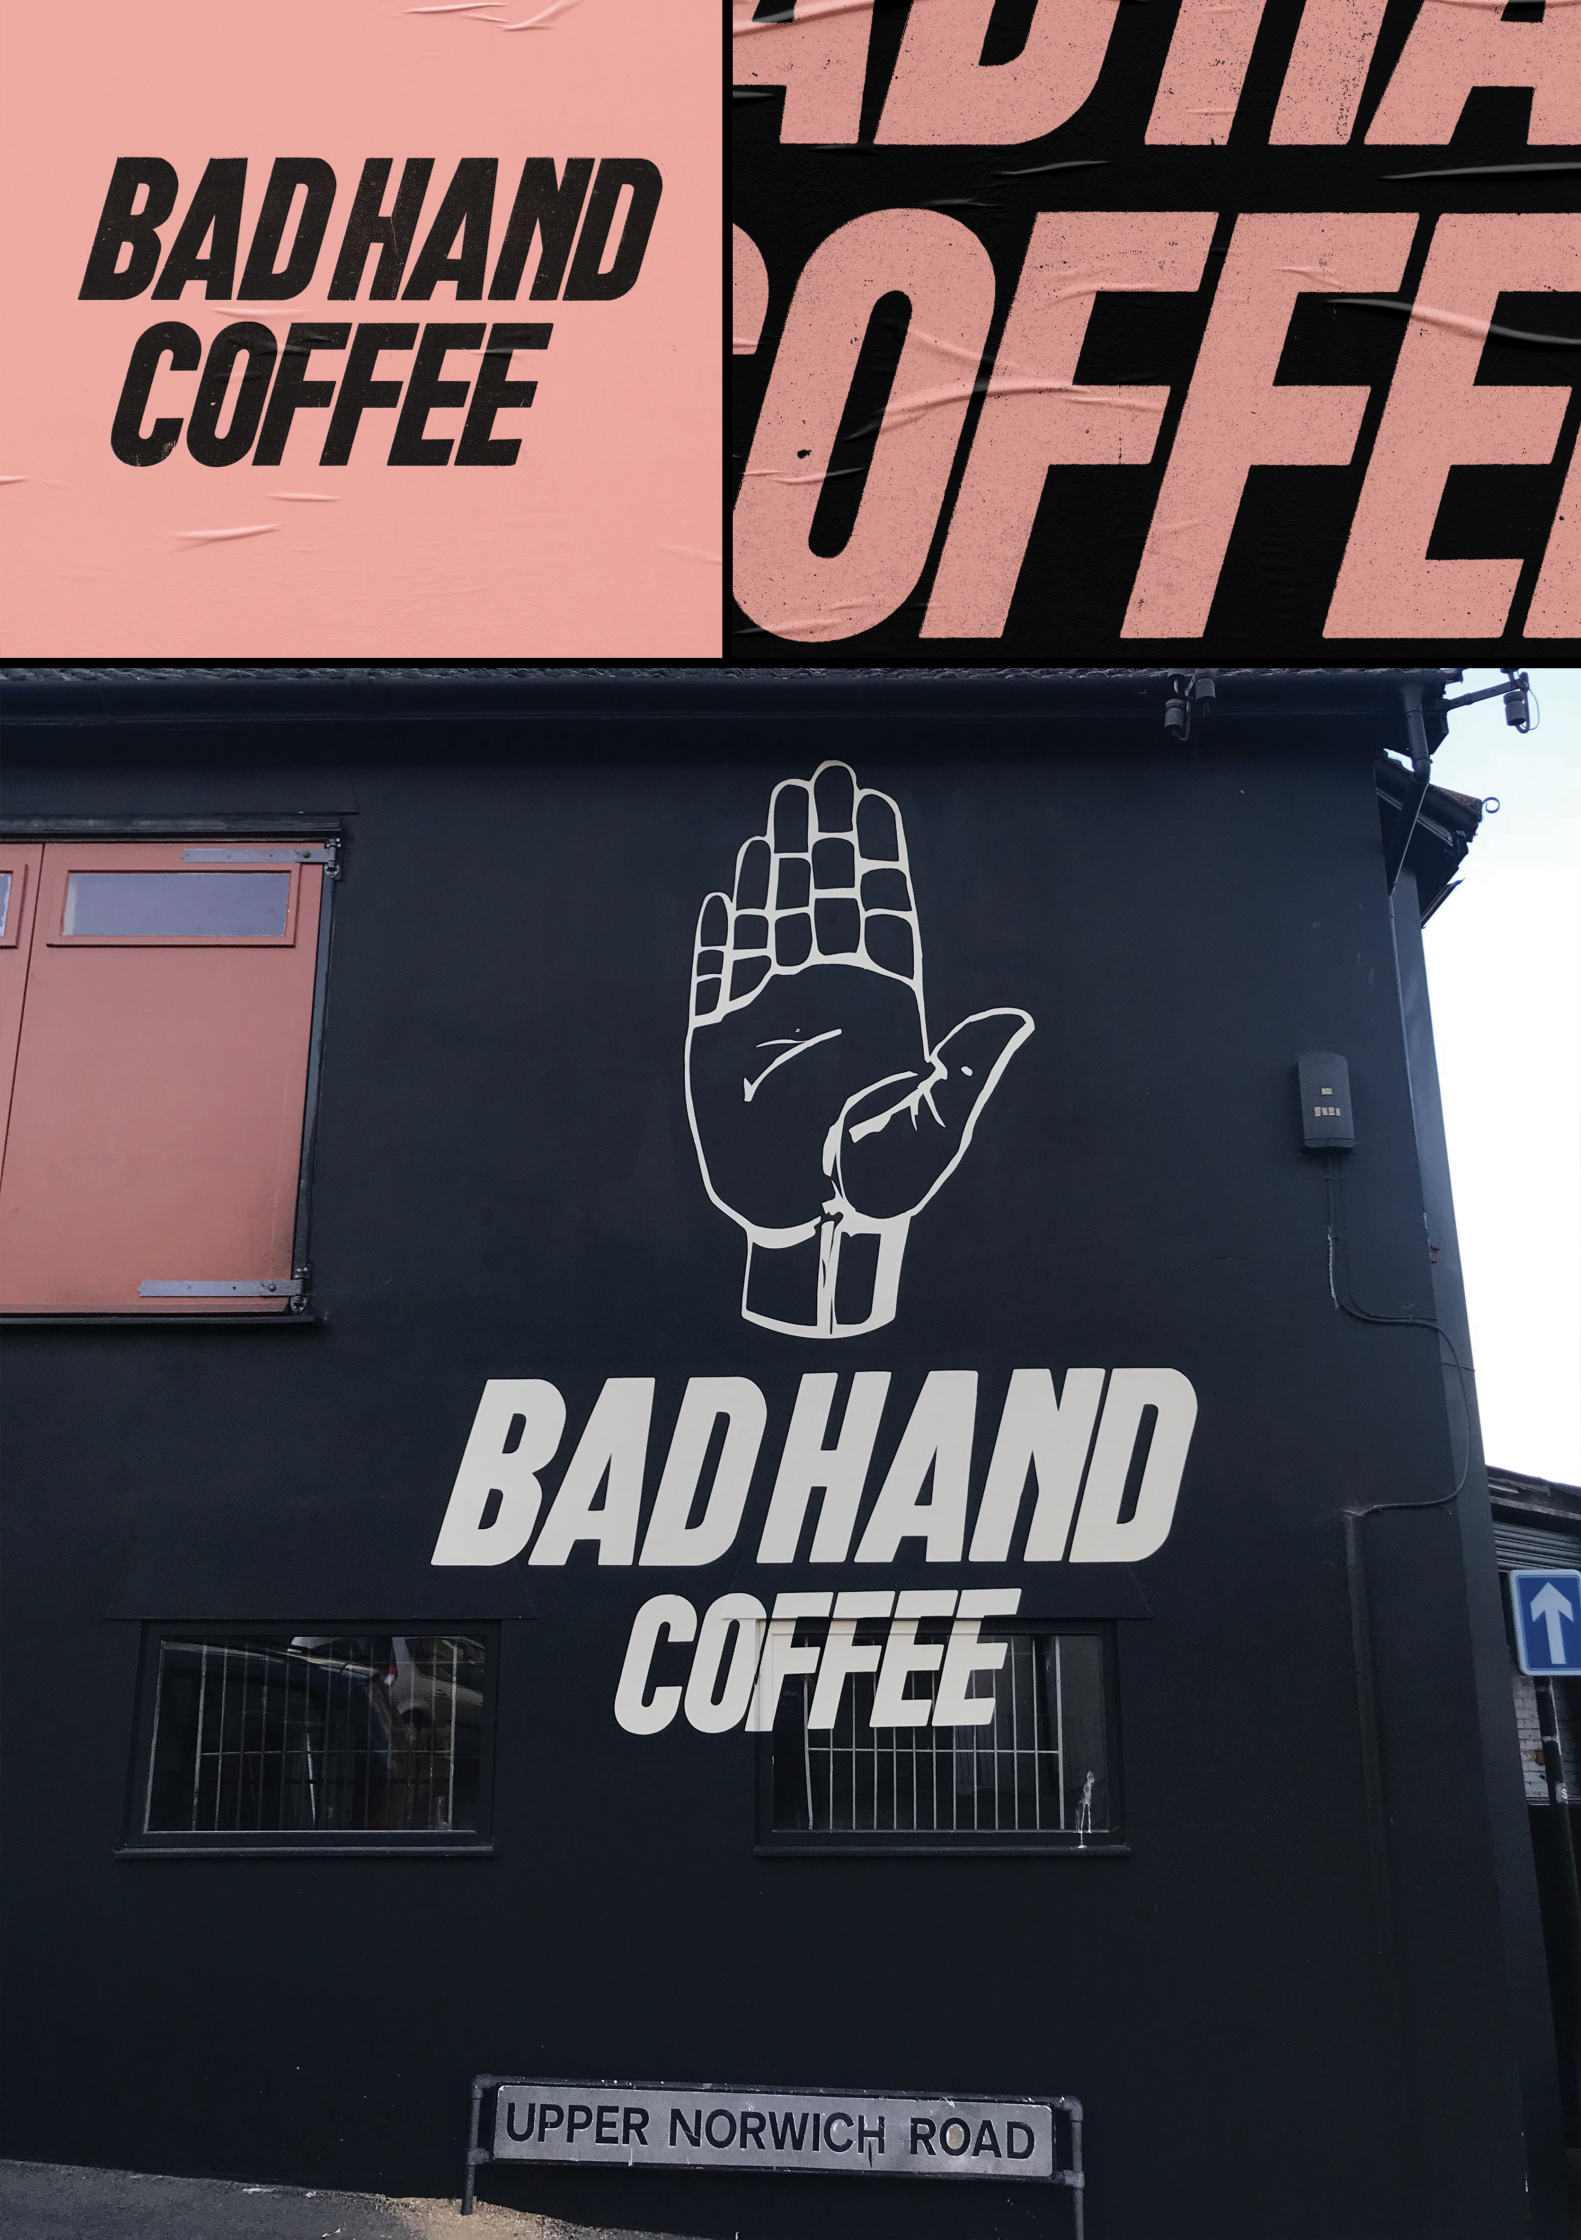 BADHAND COFFEE.jpg